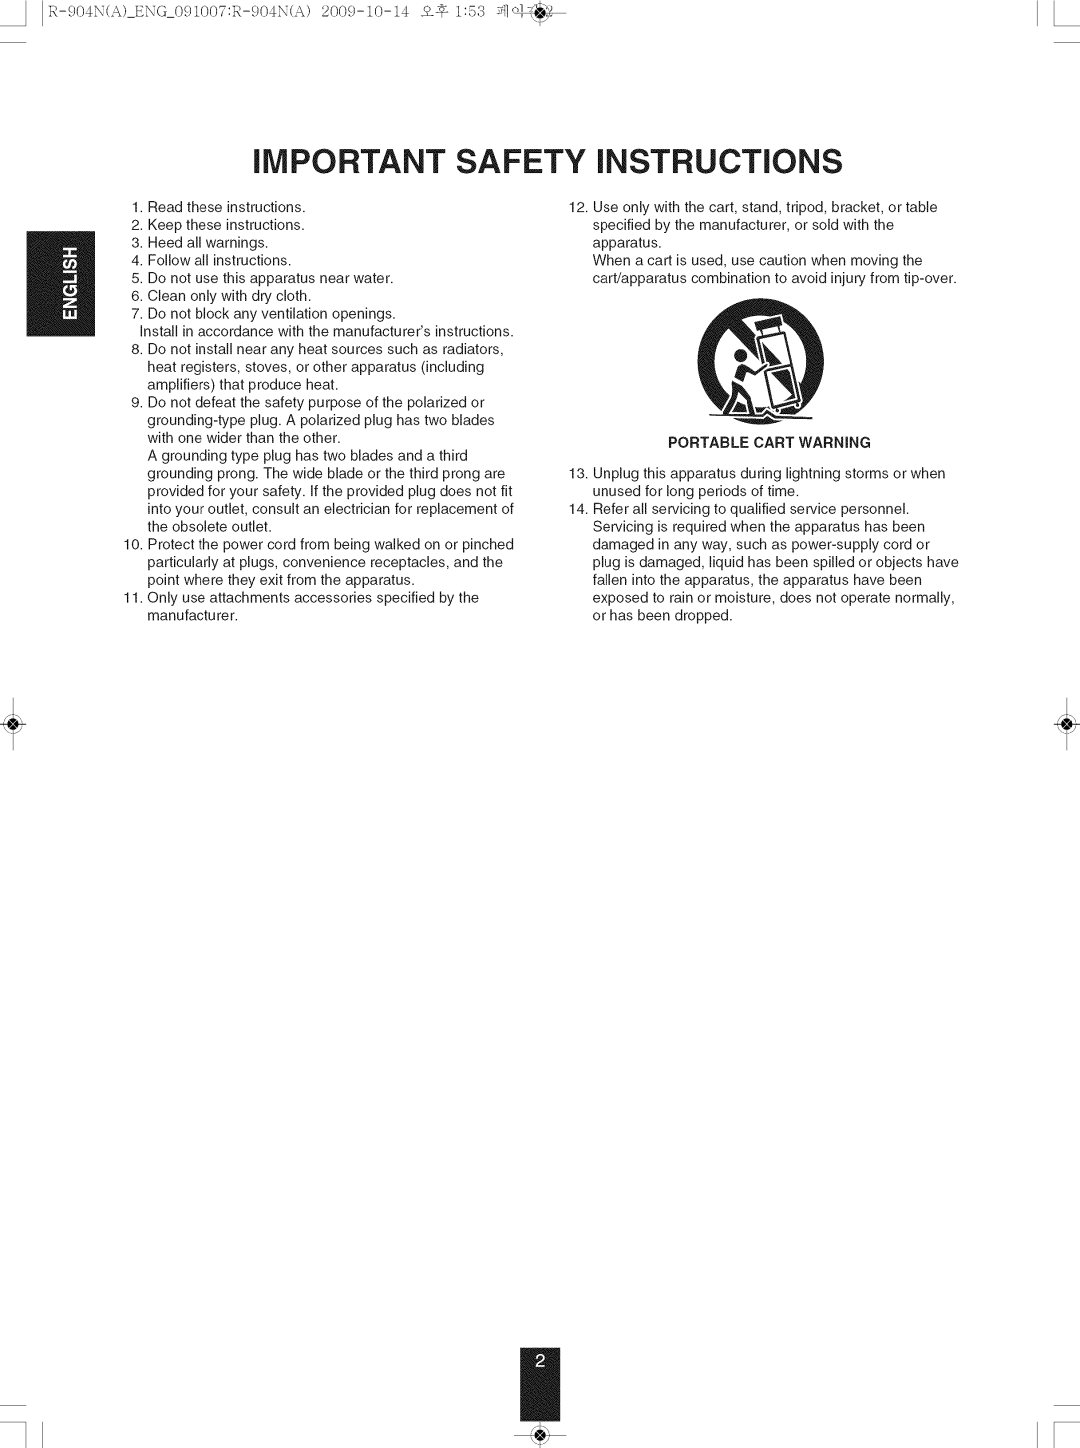 Sherwood R-904N manual Important Safety Instructions, Portable Cart Warning 